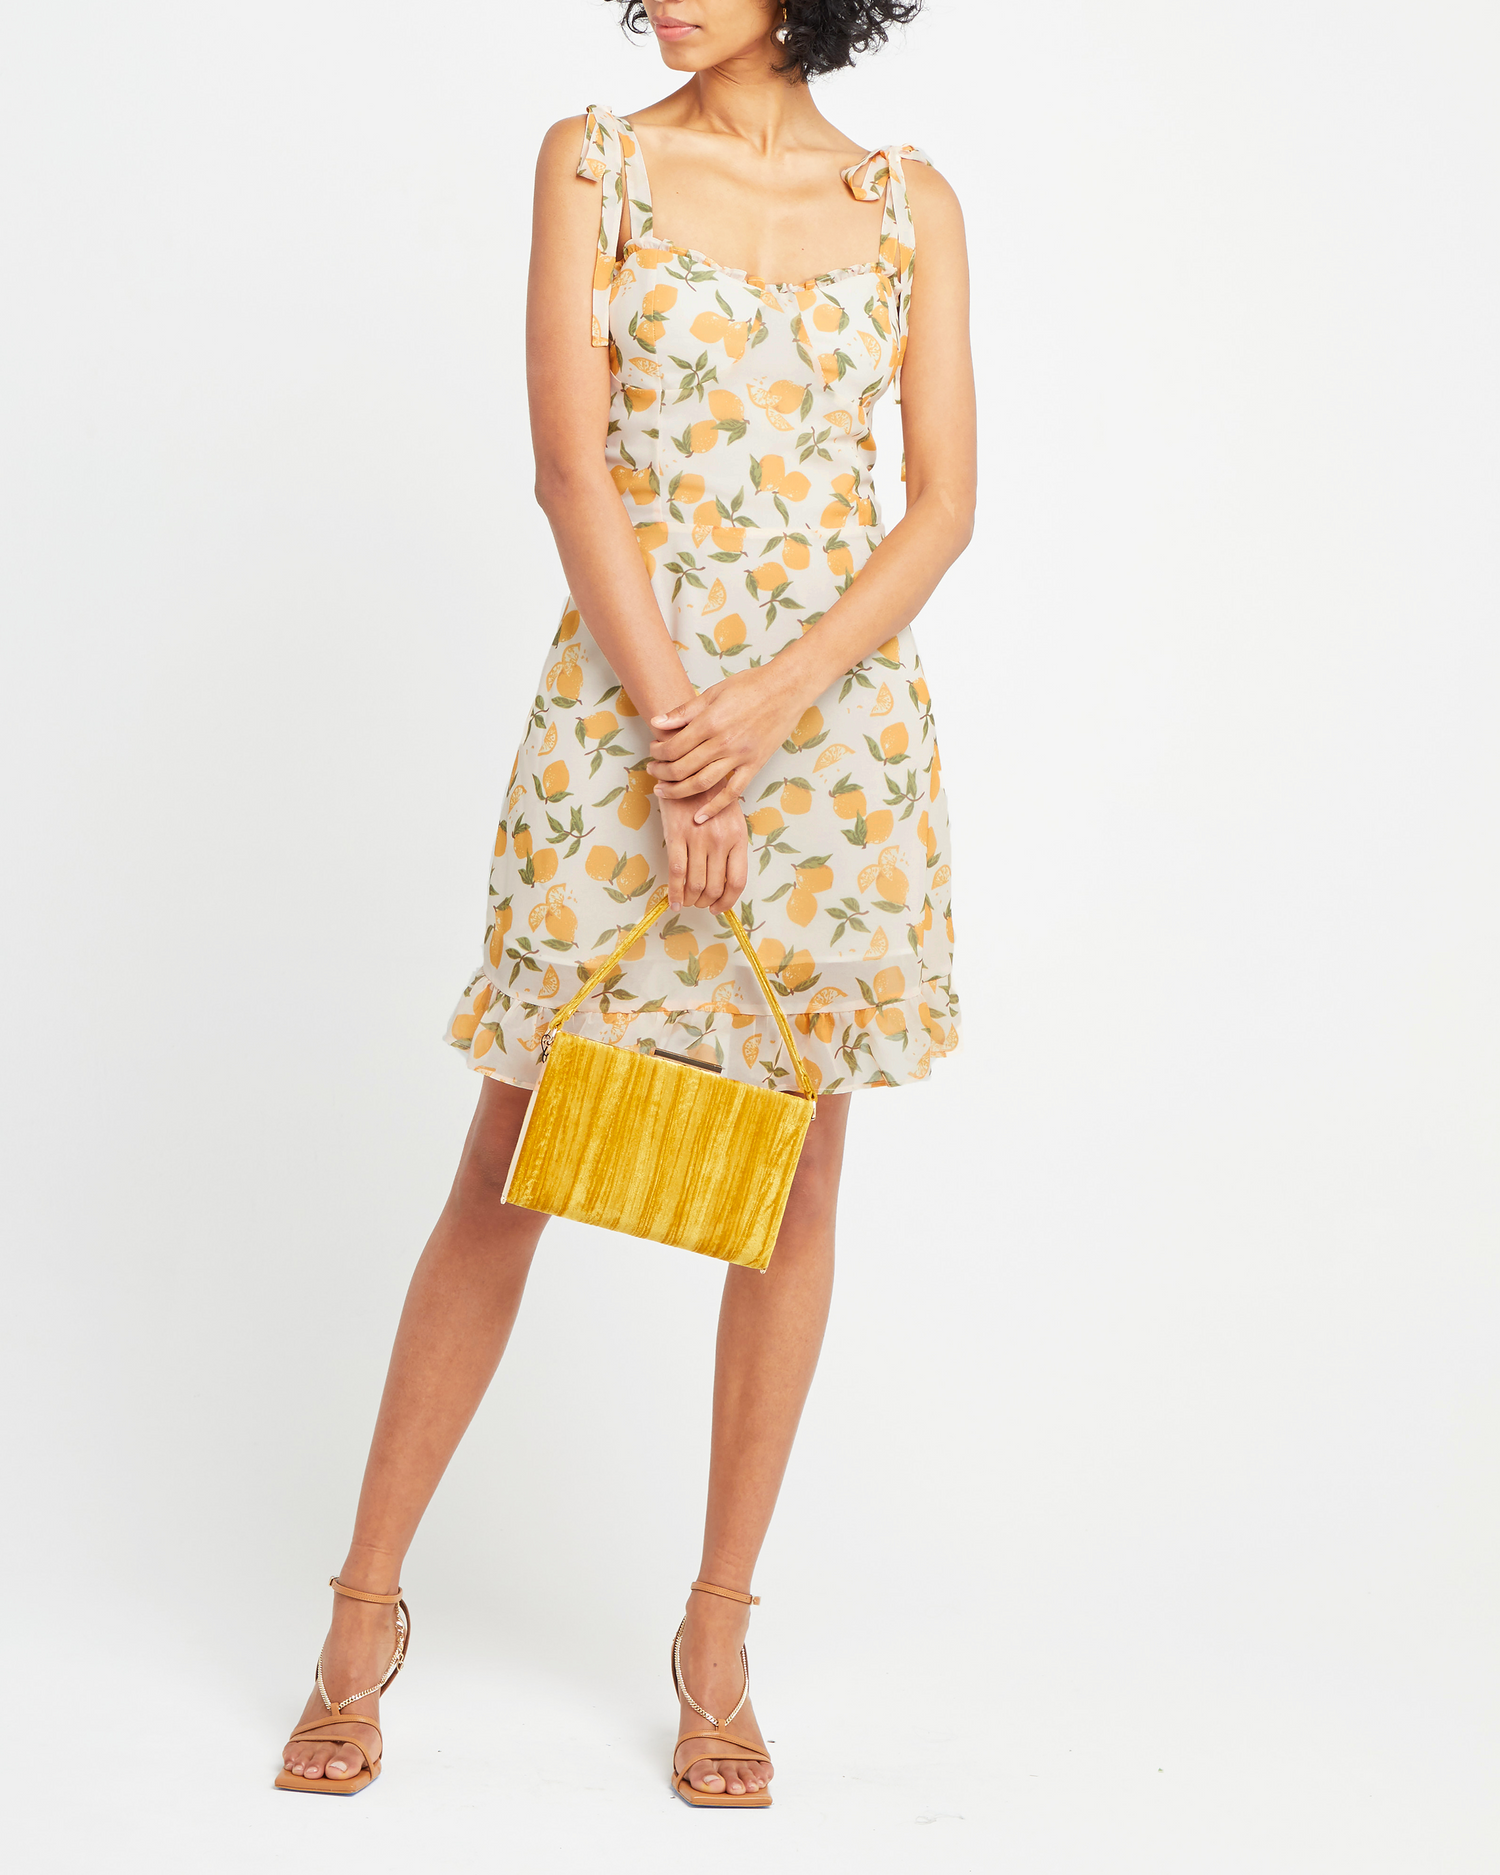 Fifth image of Sunny Dress, a yellow mini dress, ruffle, ribbon, tie straps, ribbon, bows, lemon print